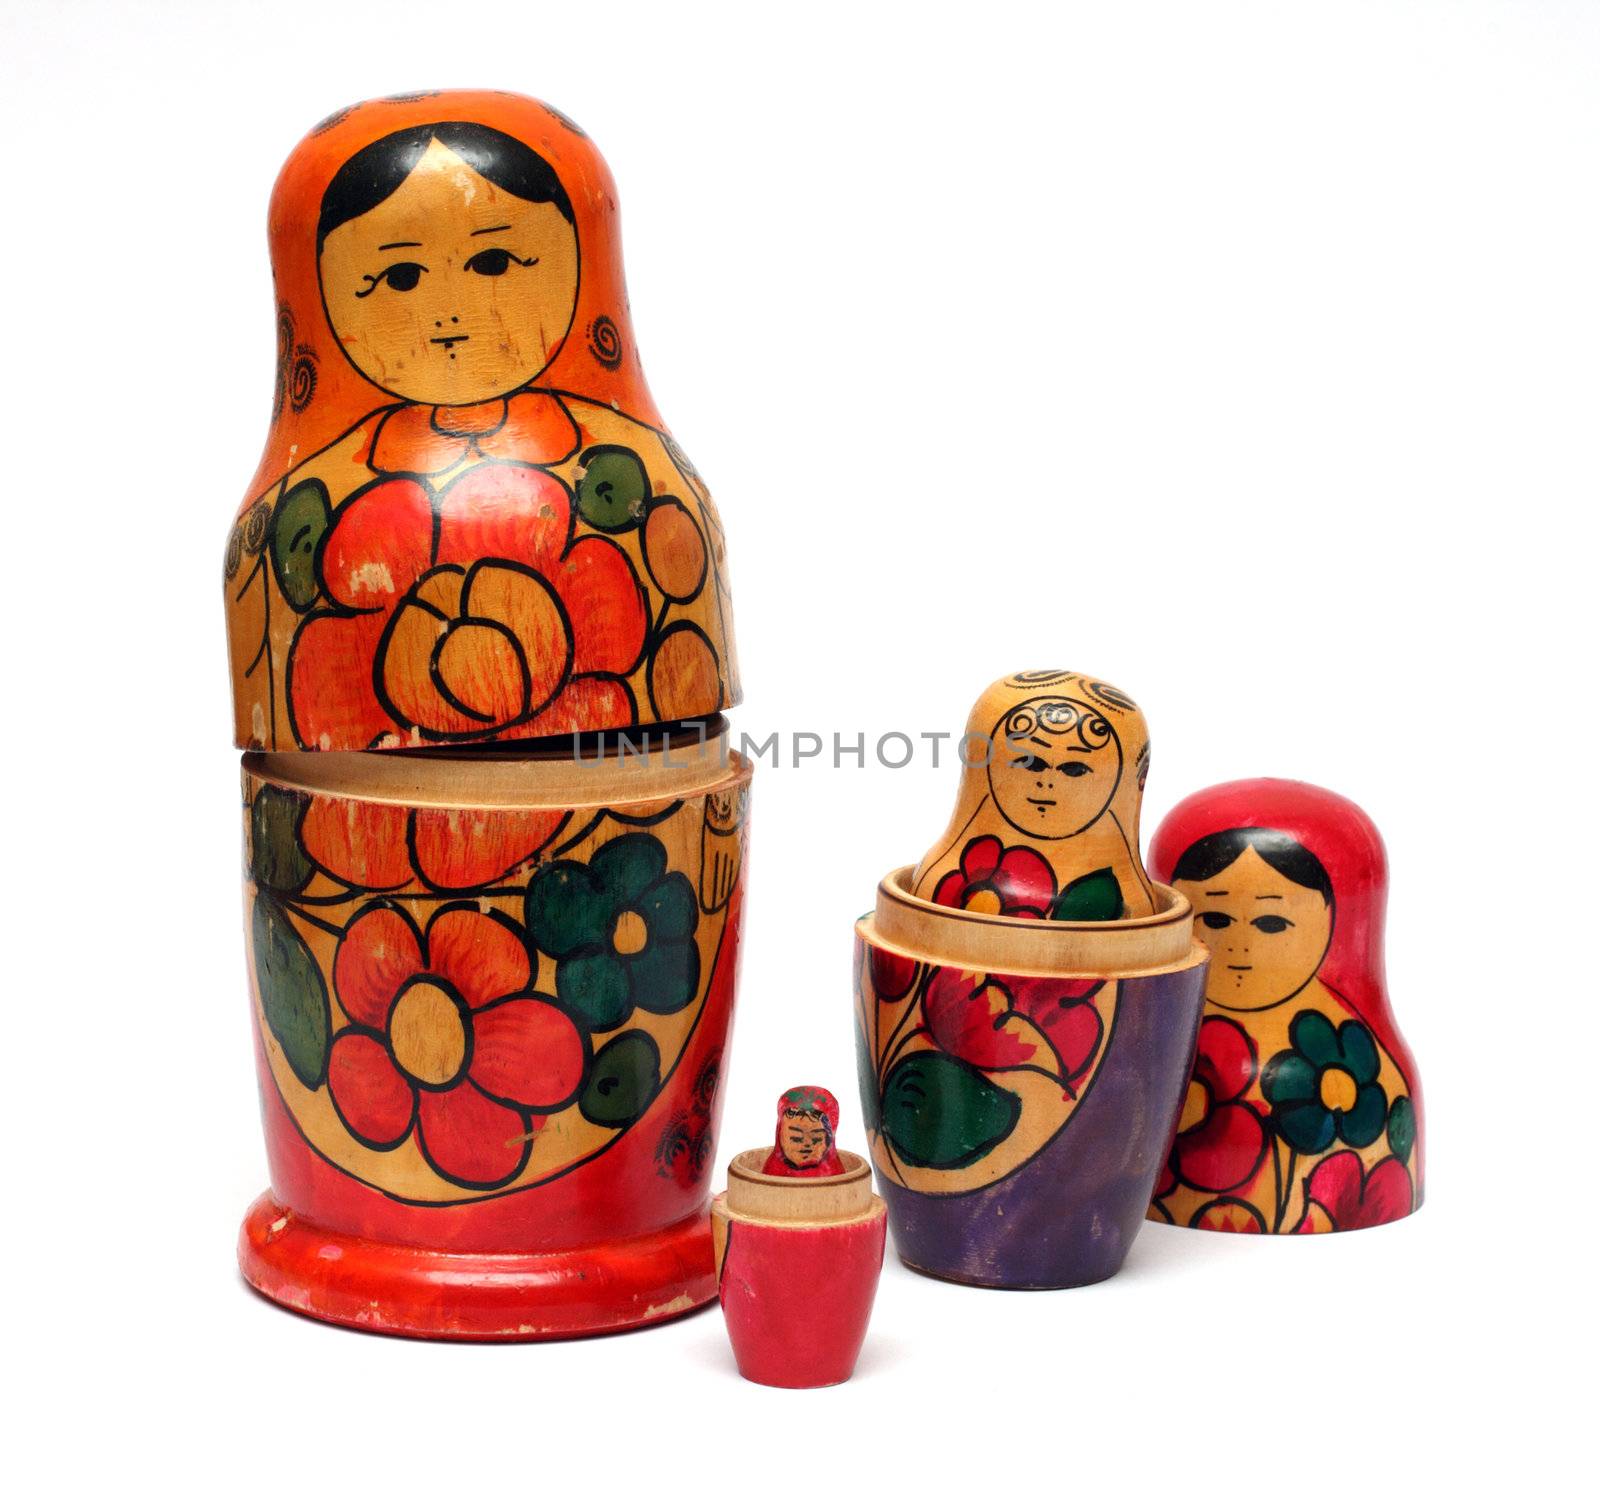 russian wooden dolls set - "matreshka" by Mikko